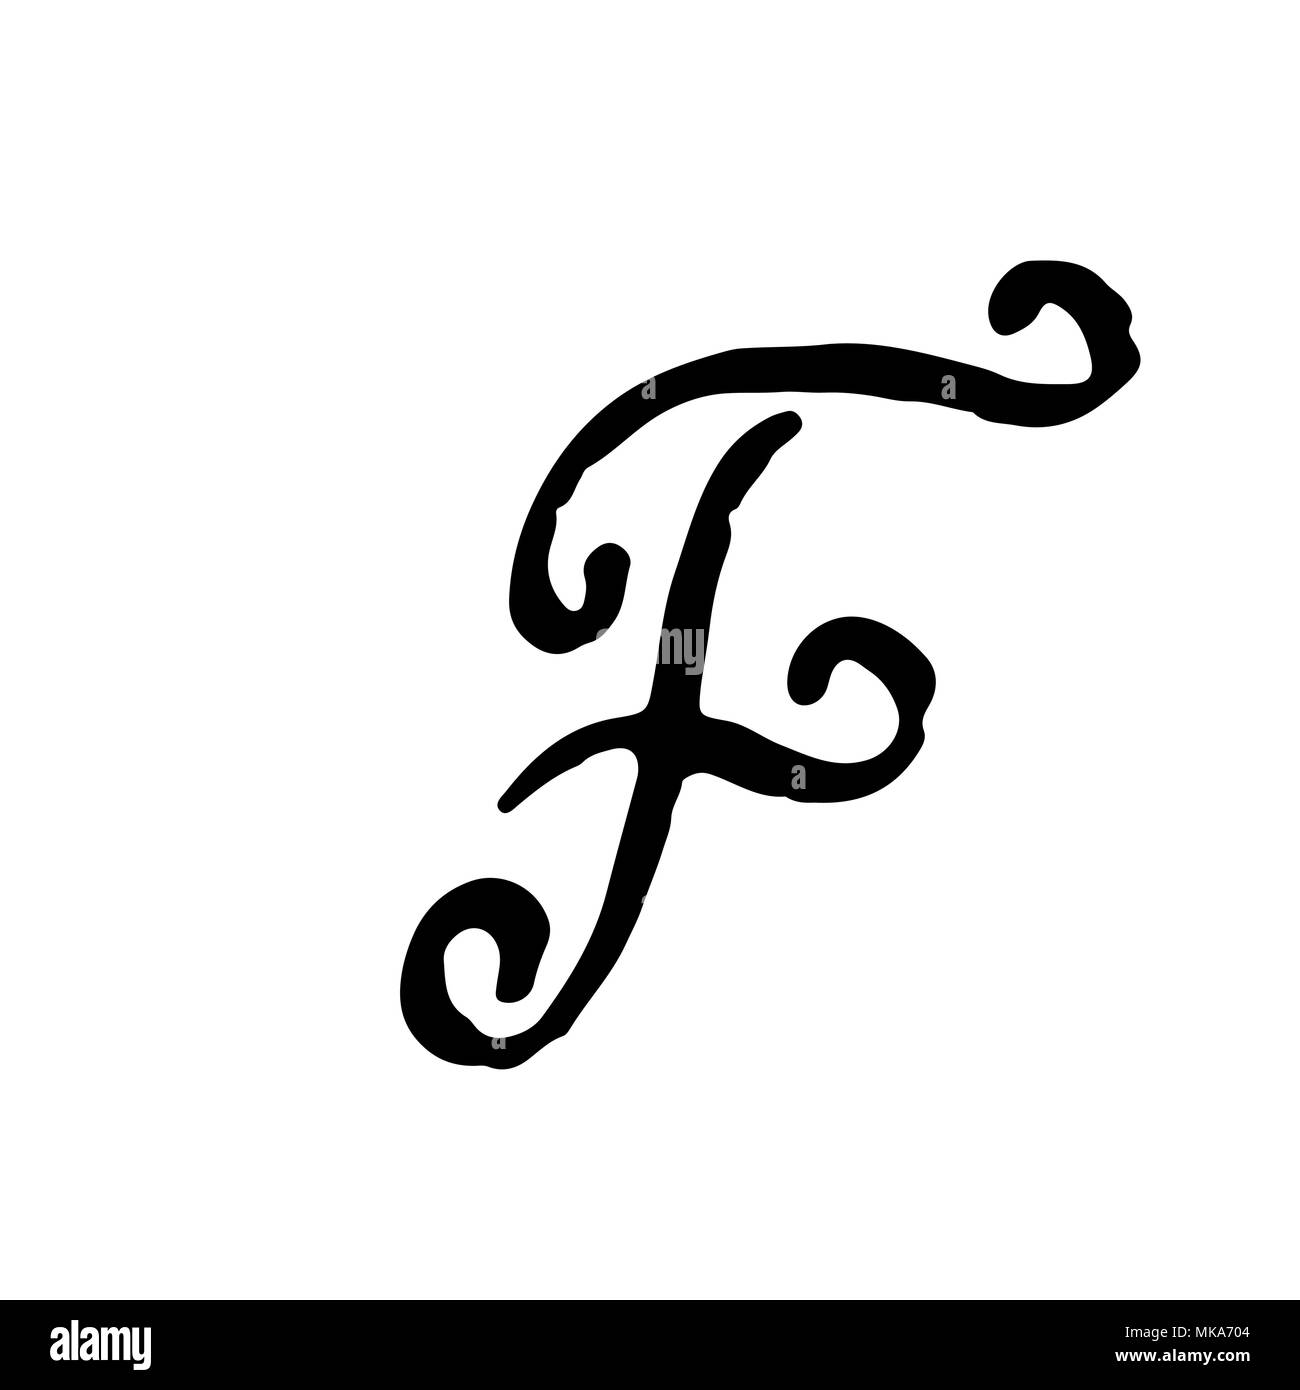 Letter F. Handwritten by dry brush. Rough strokes textured font. Vector illustration. Grunge style alphabet. Stock Vector